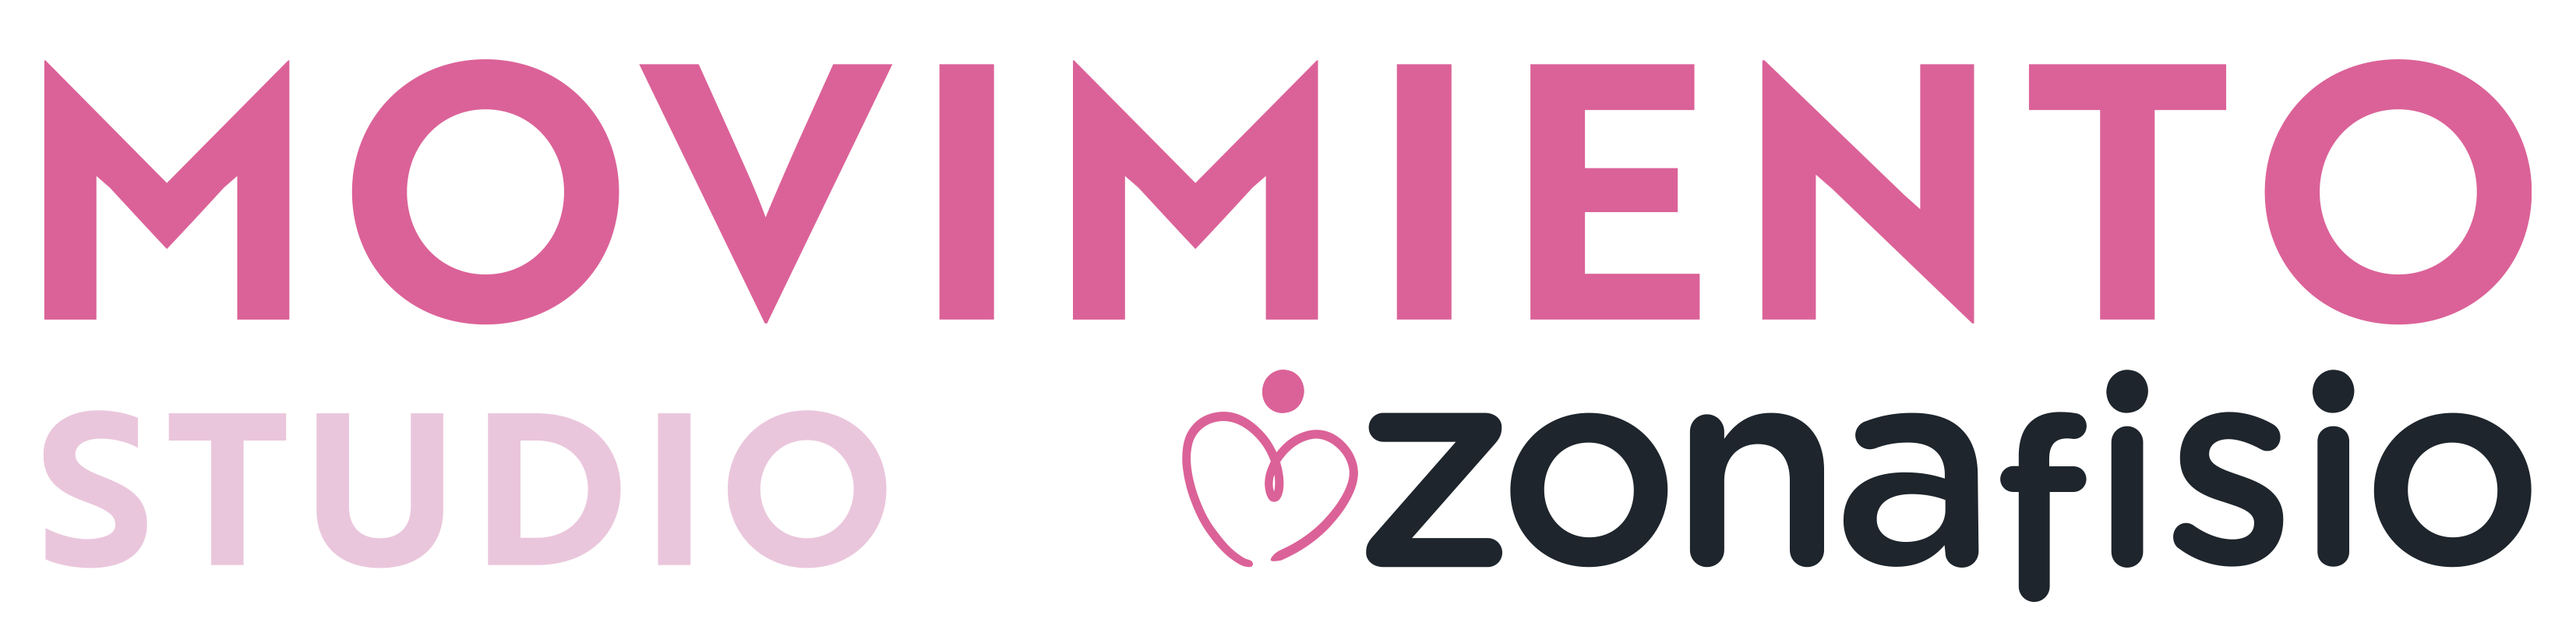 Movimiento Zonafisio logo